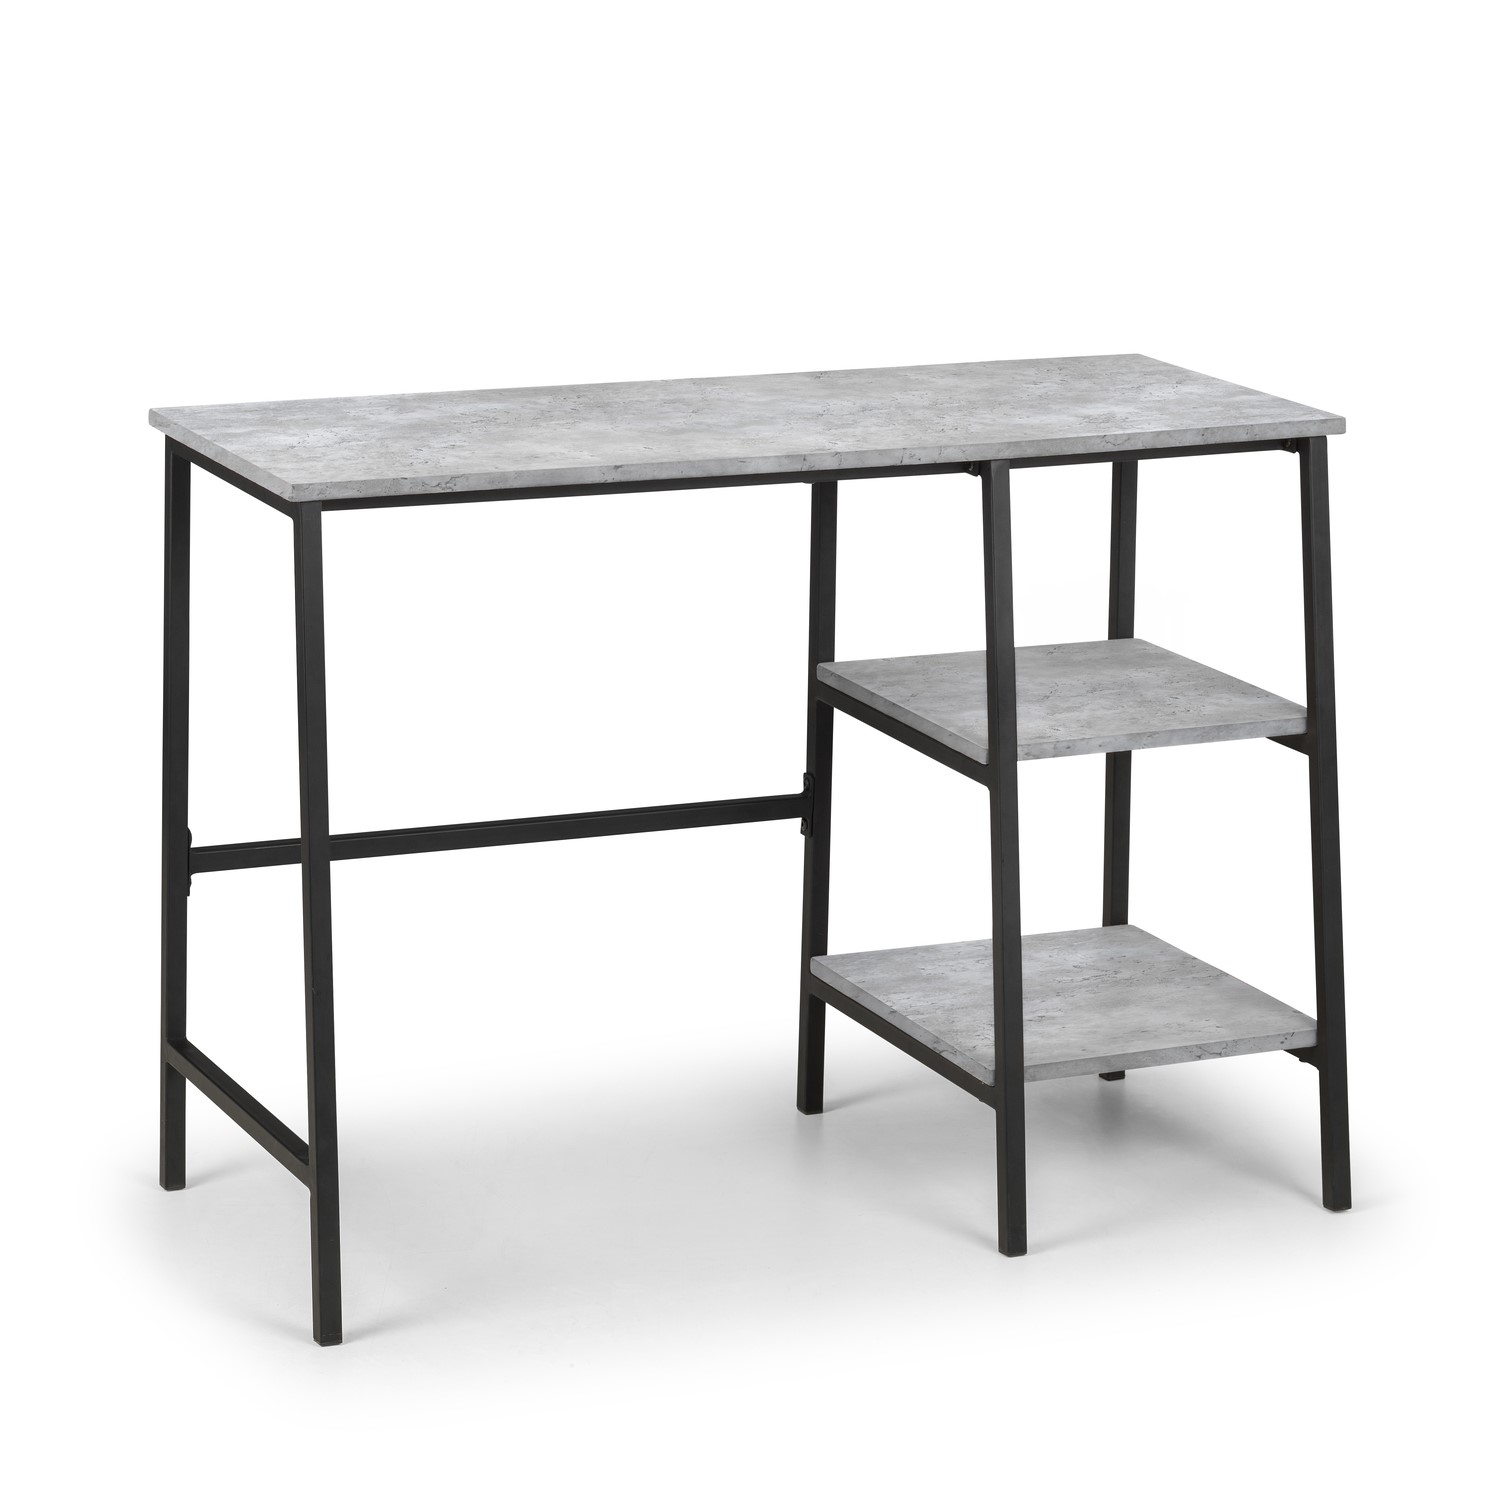 Photo of Grey concrete effect desk with shelves - staten - julian bowen